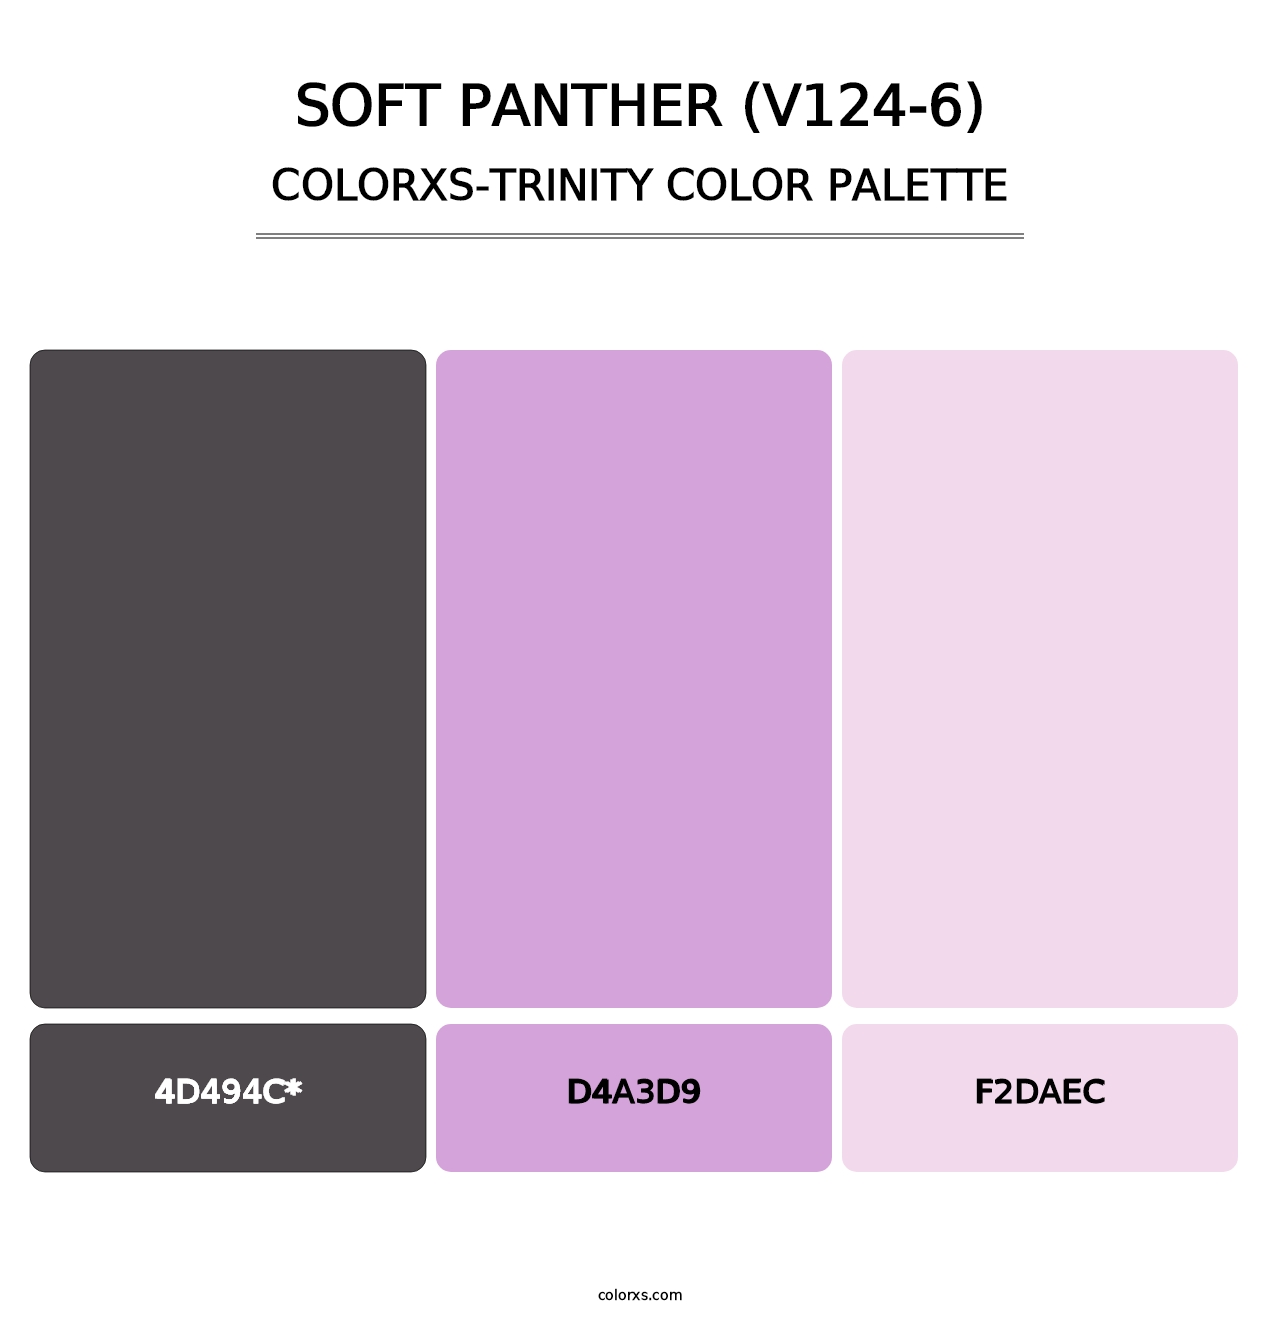 Soft Panther (V124-6) - Colorxs Trinity Palette